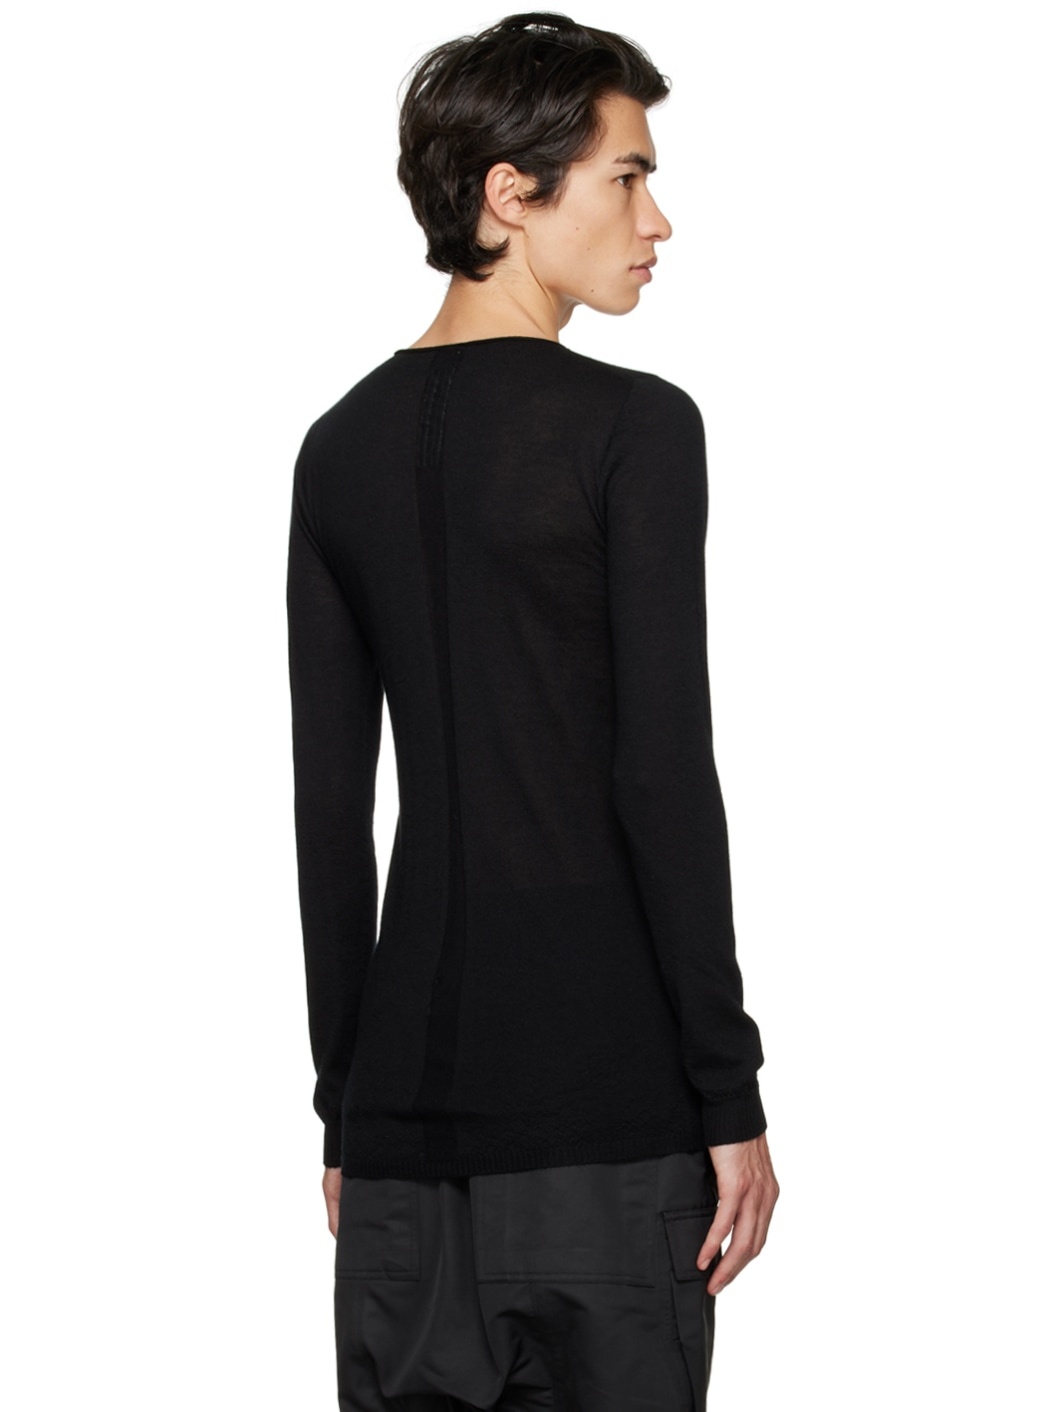 Black Round Neck Long Sleeve T-Shirt - 3